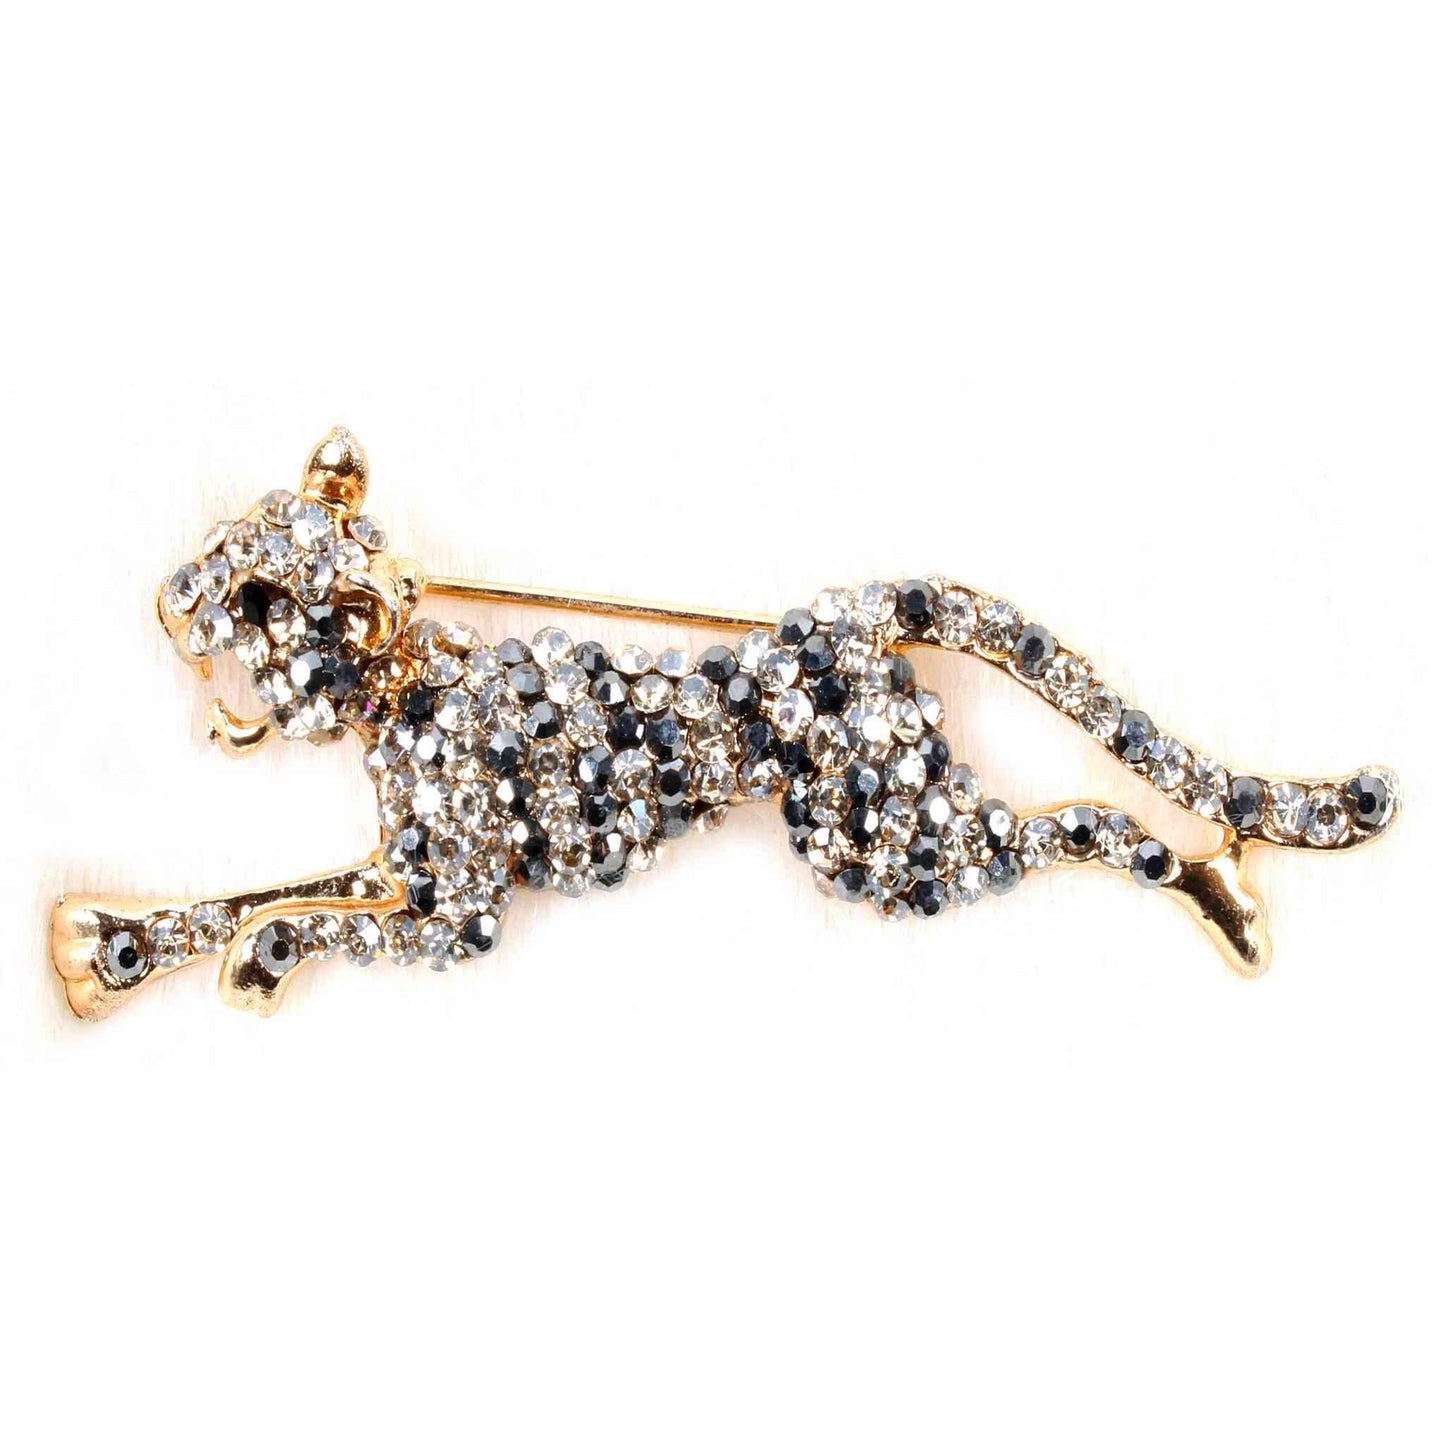 Indian Petals Rhinestone Studded Panther Design Elegant Metal Lapel Pin Brooch for Boys Men, Gift, Black White - Indian Petals